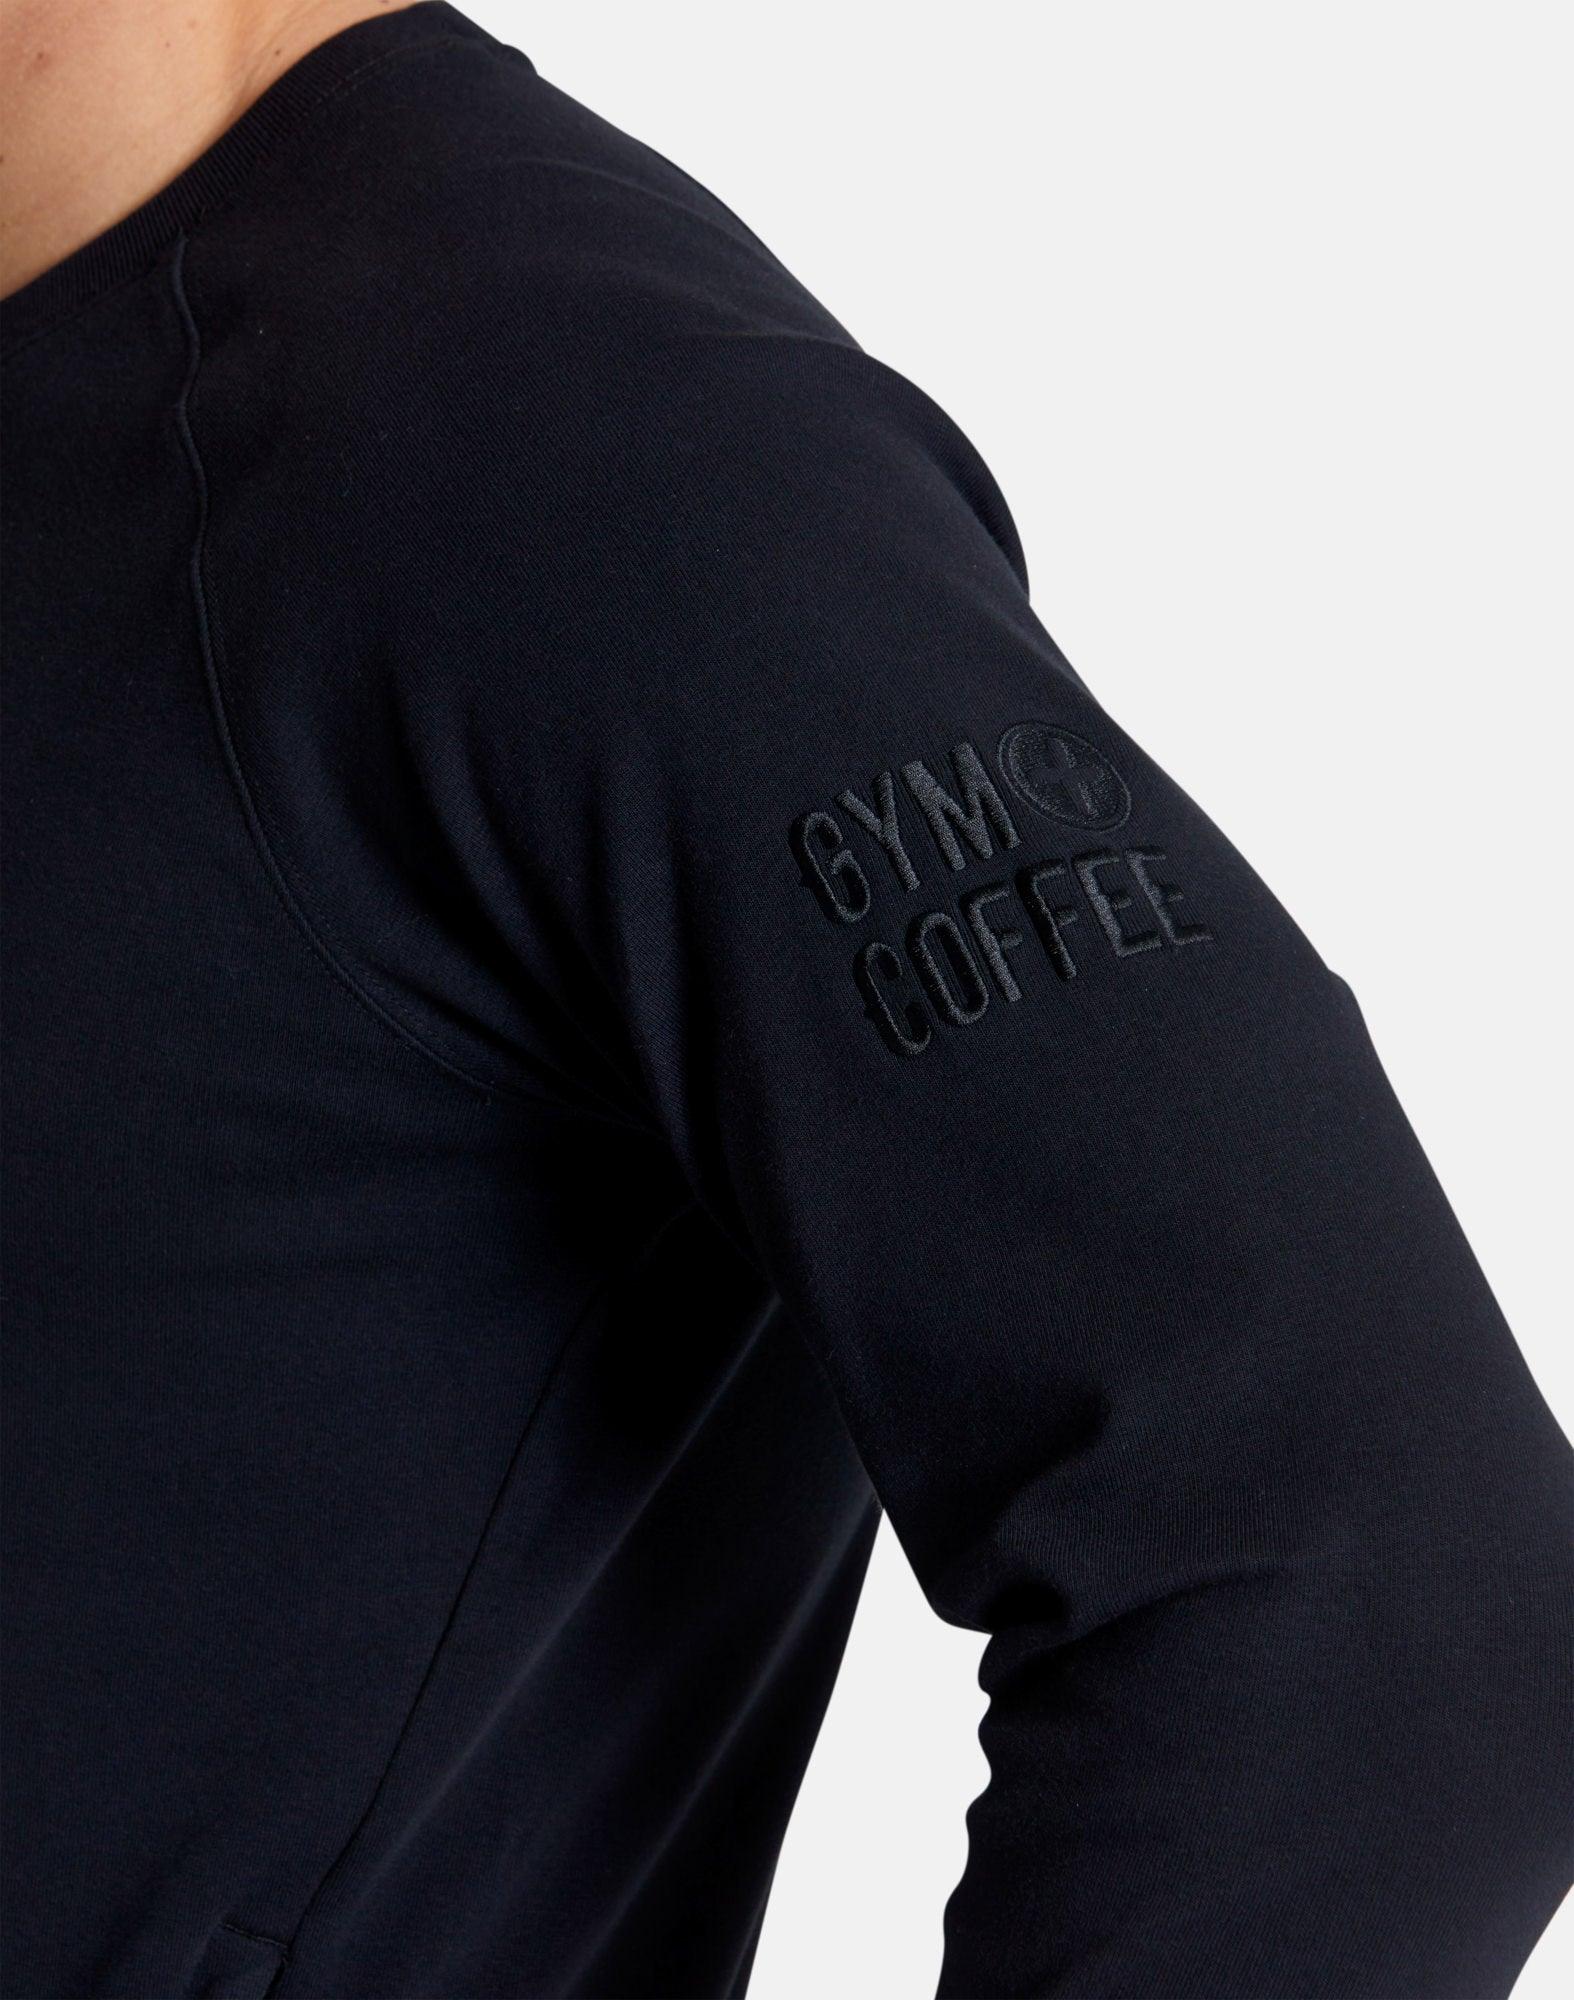 Chill Crew in Black - Sweatshirts - Gym+Coffee IE